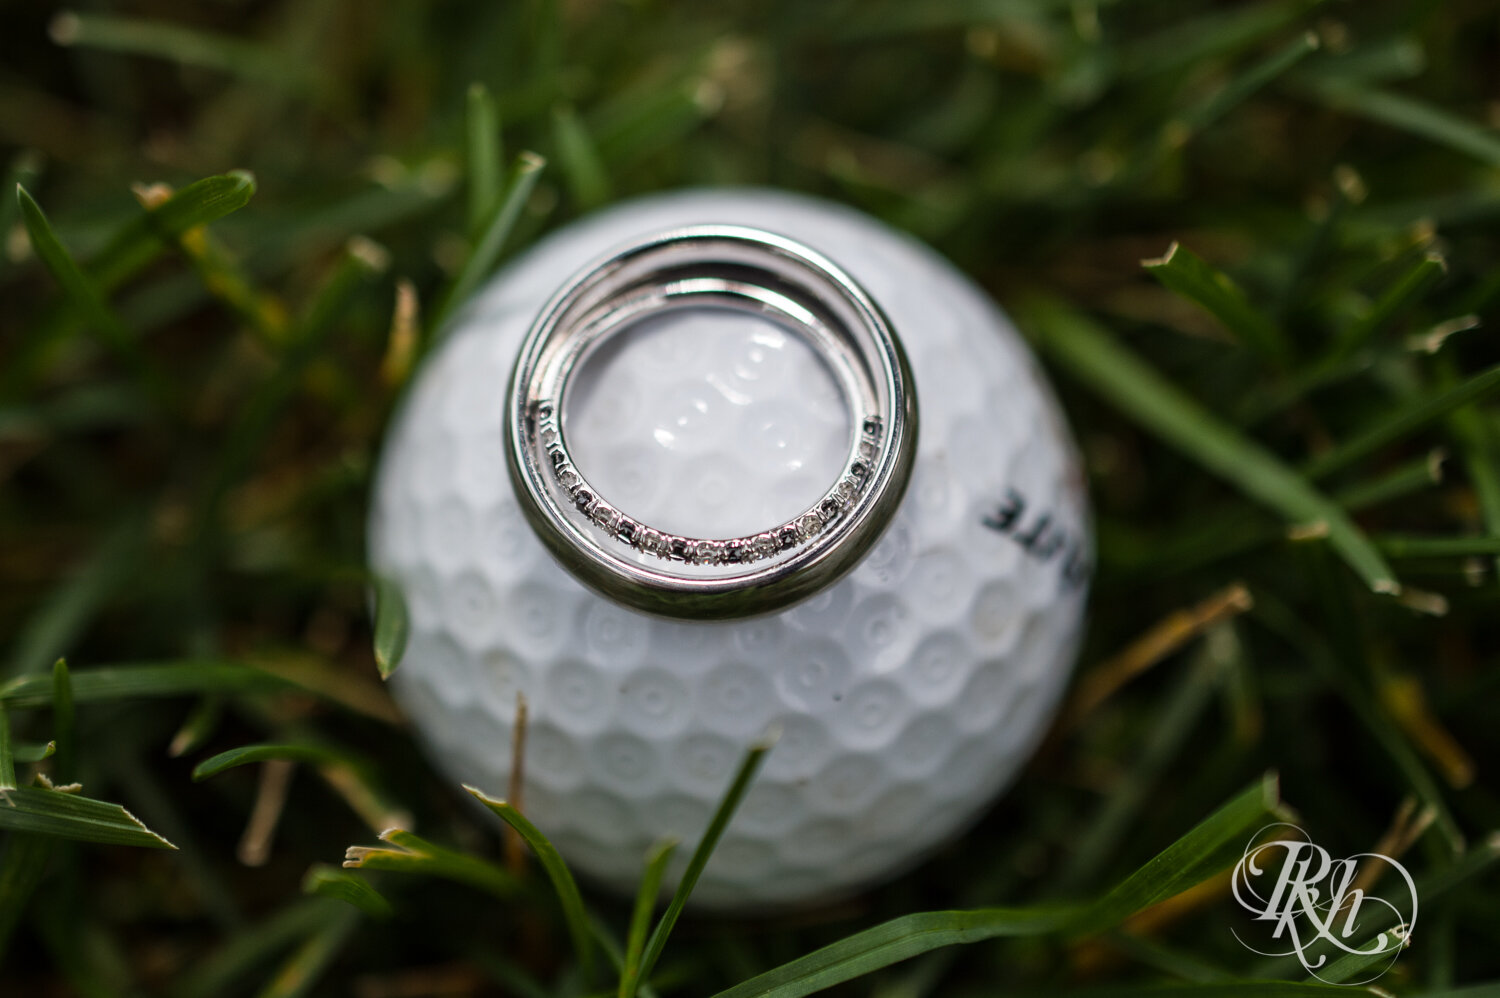 Wedding rings on golf ball at Olympic Hills Golf Club in Eden Prairie, Minnesota.